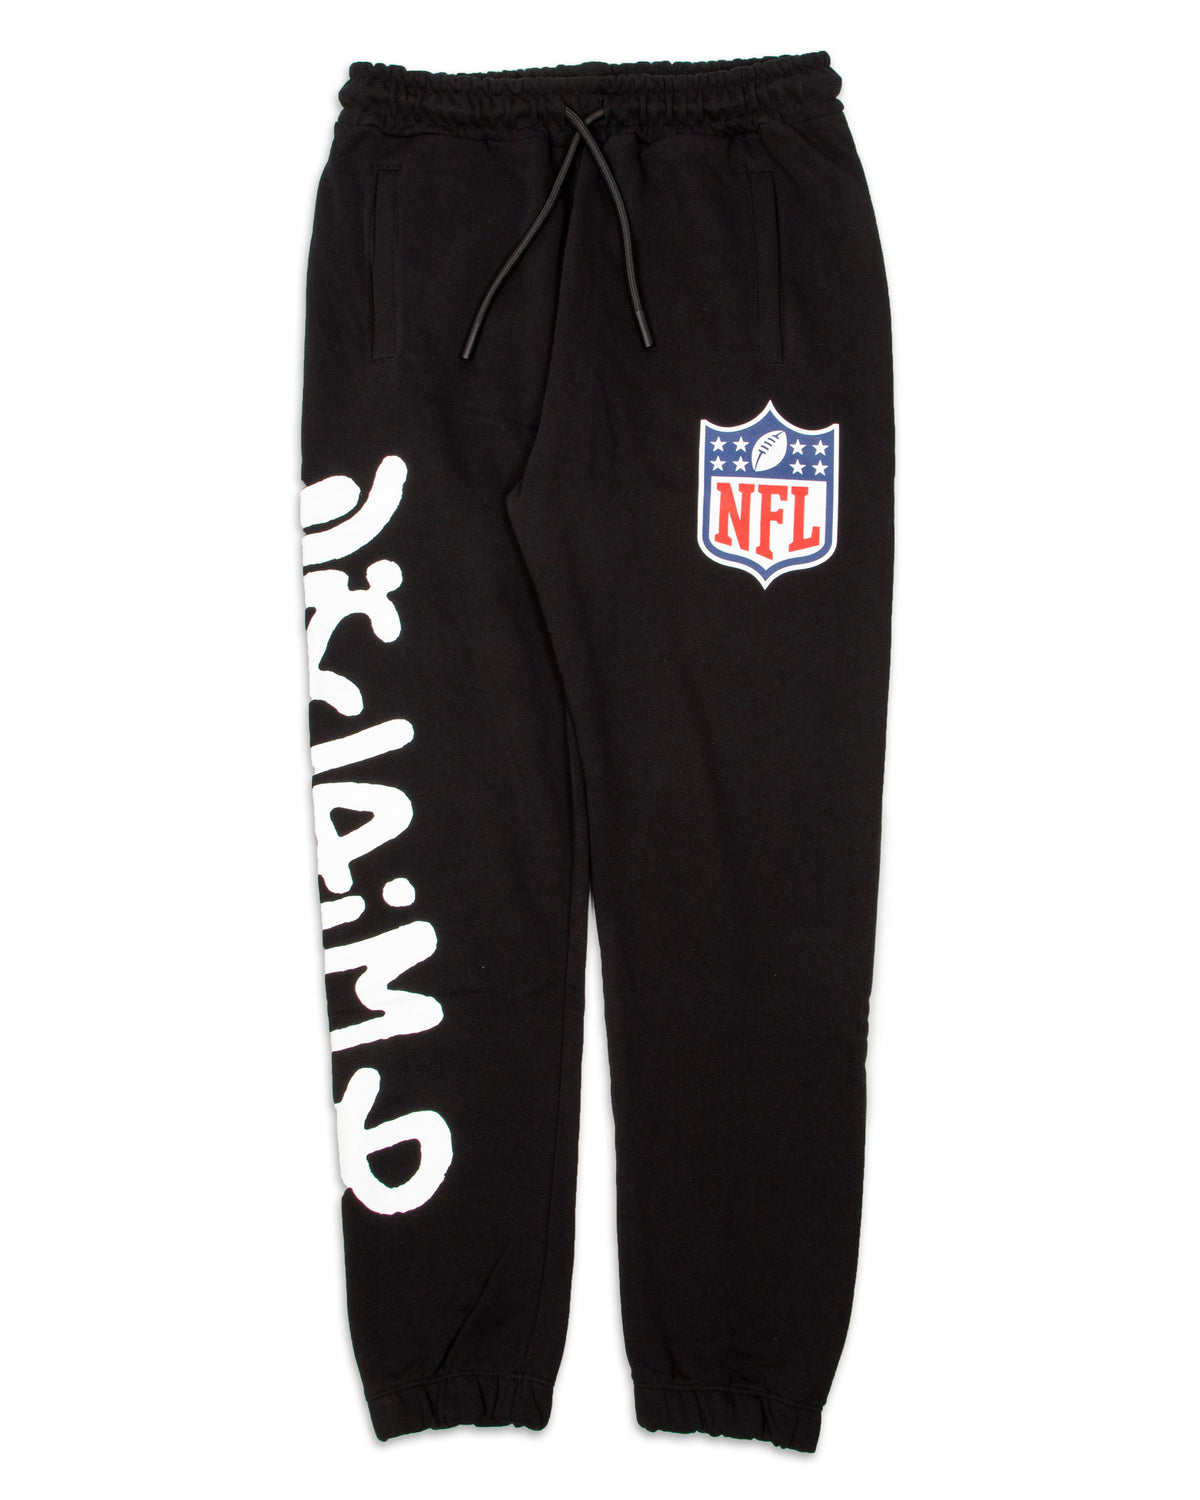 Pantalone NFL 22ENF53004-Nero